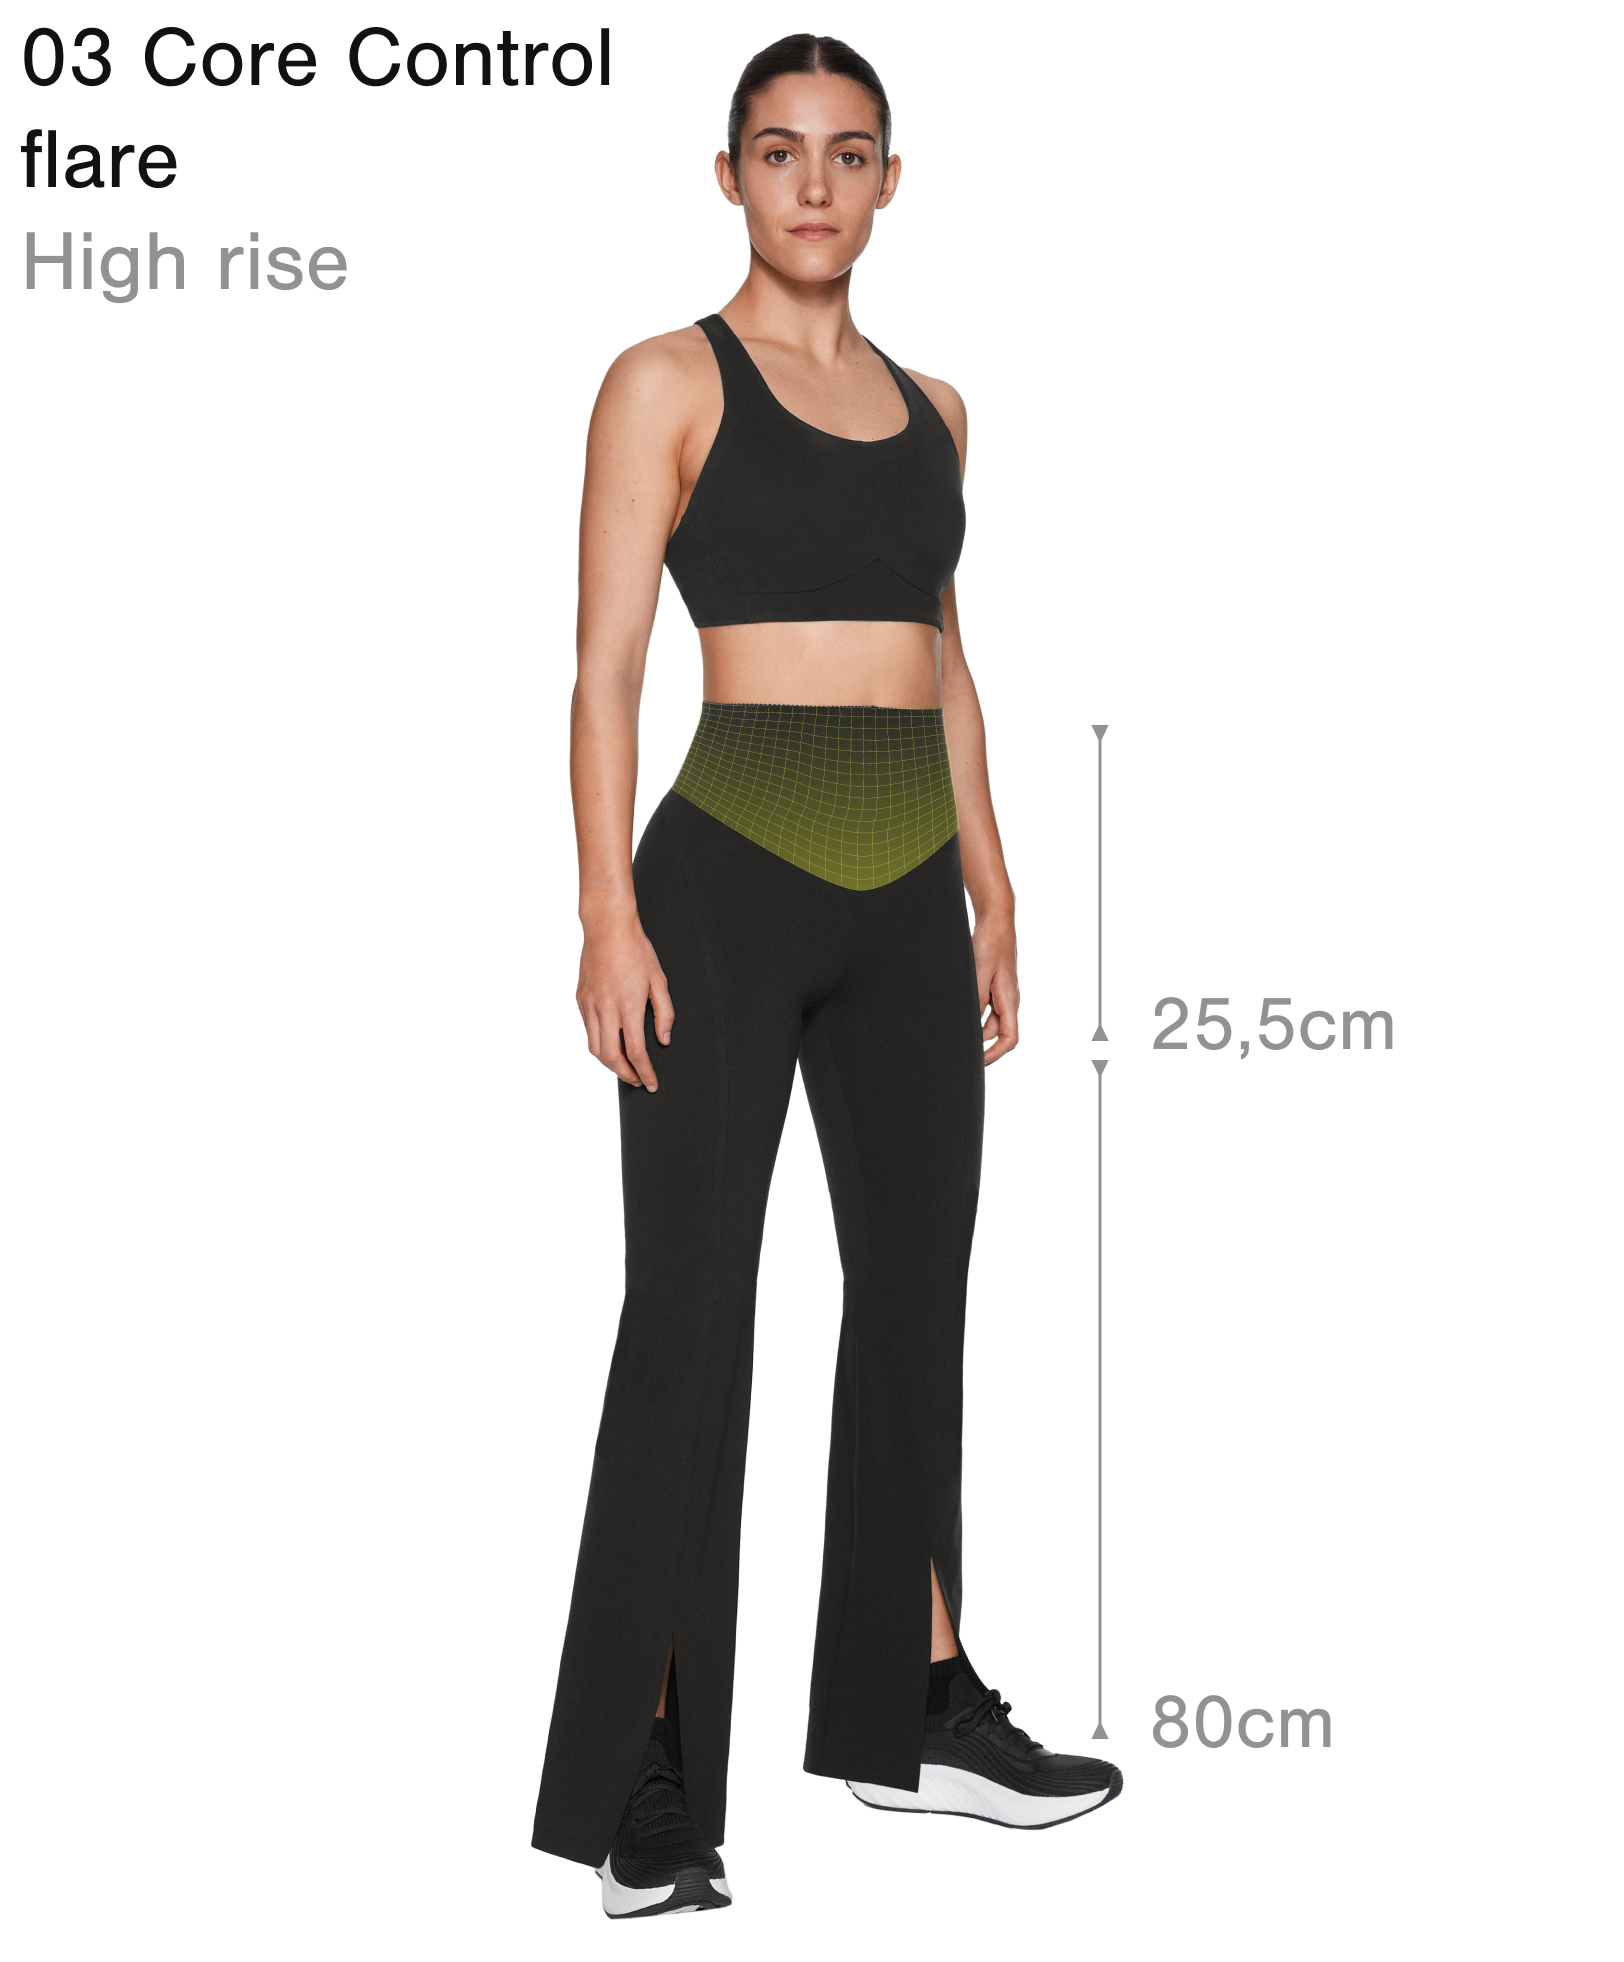 Core Control Compressive super-high-rise leggings